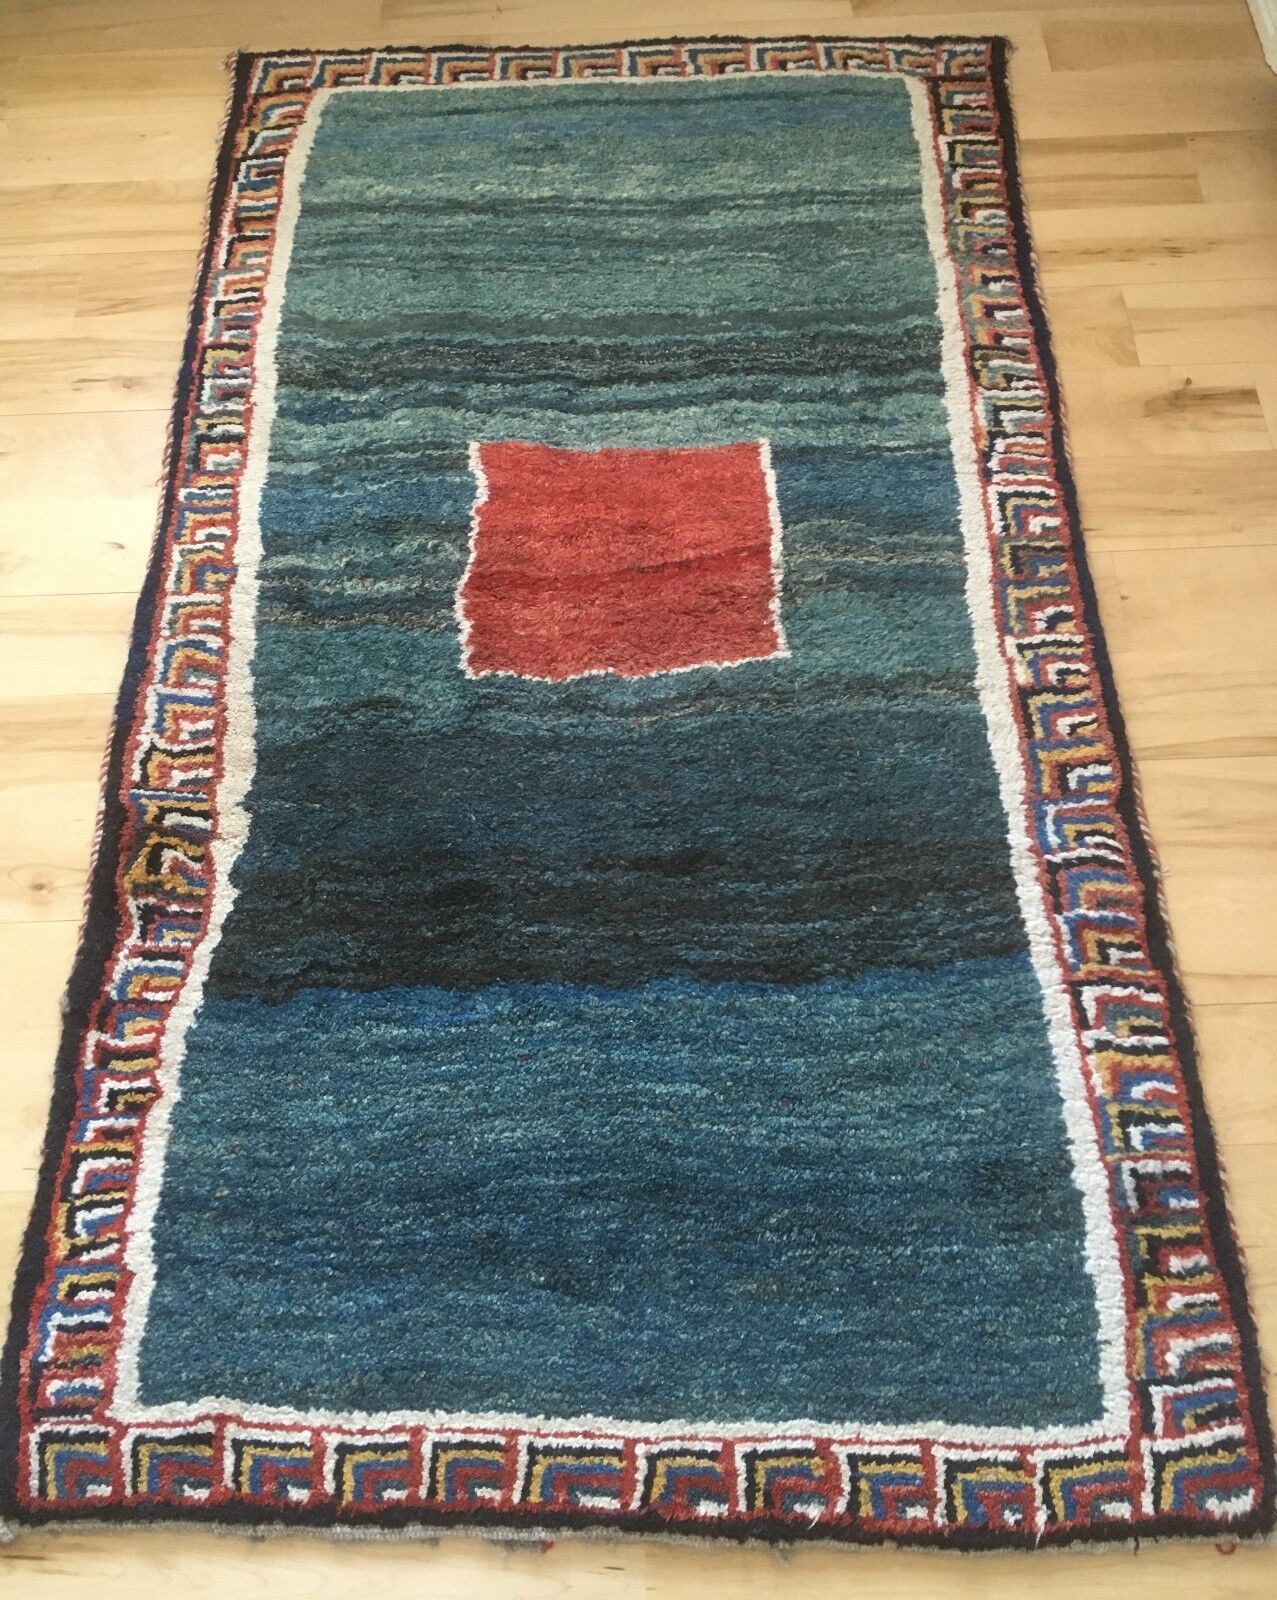 GABBEH nomadic tribal carpet rug handmade 100% wool vegetable dyes